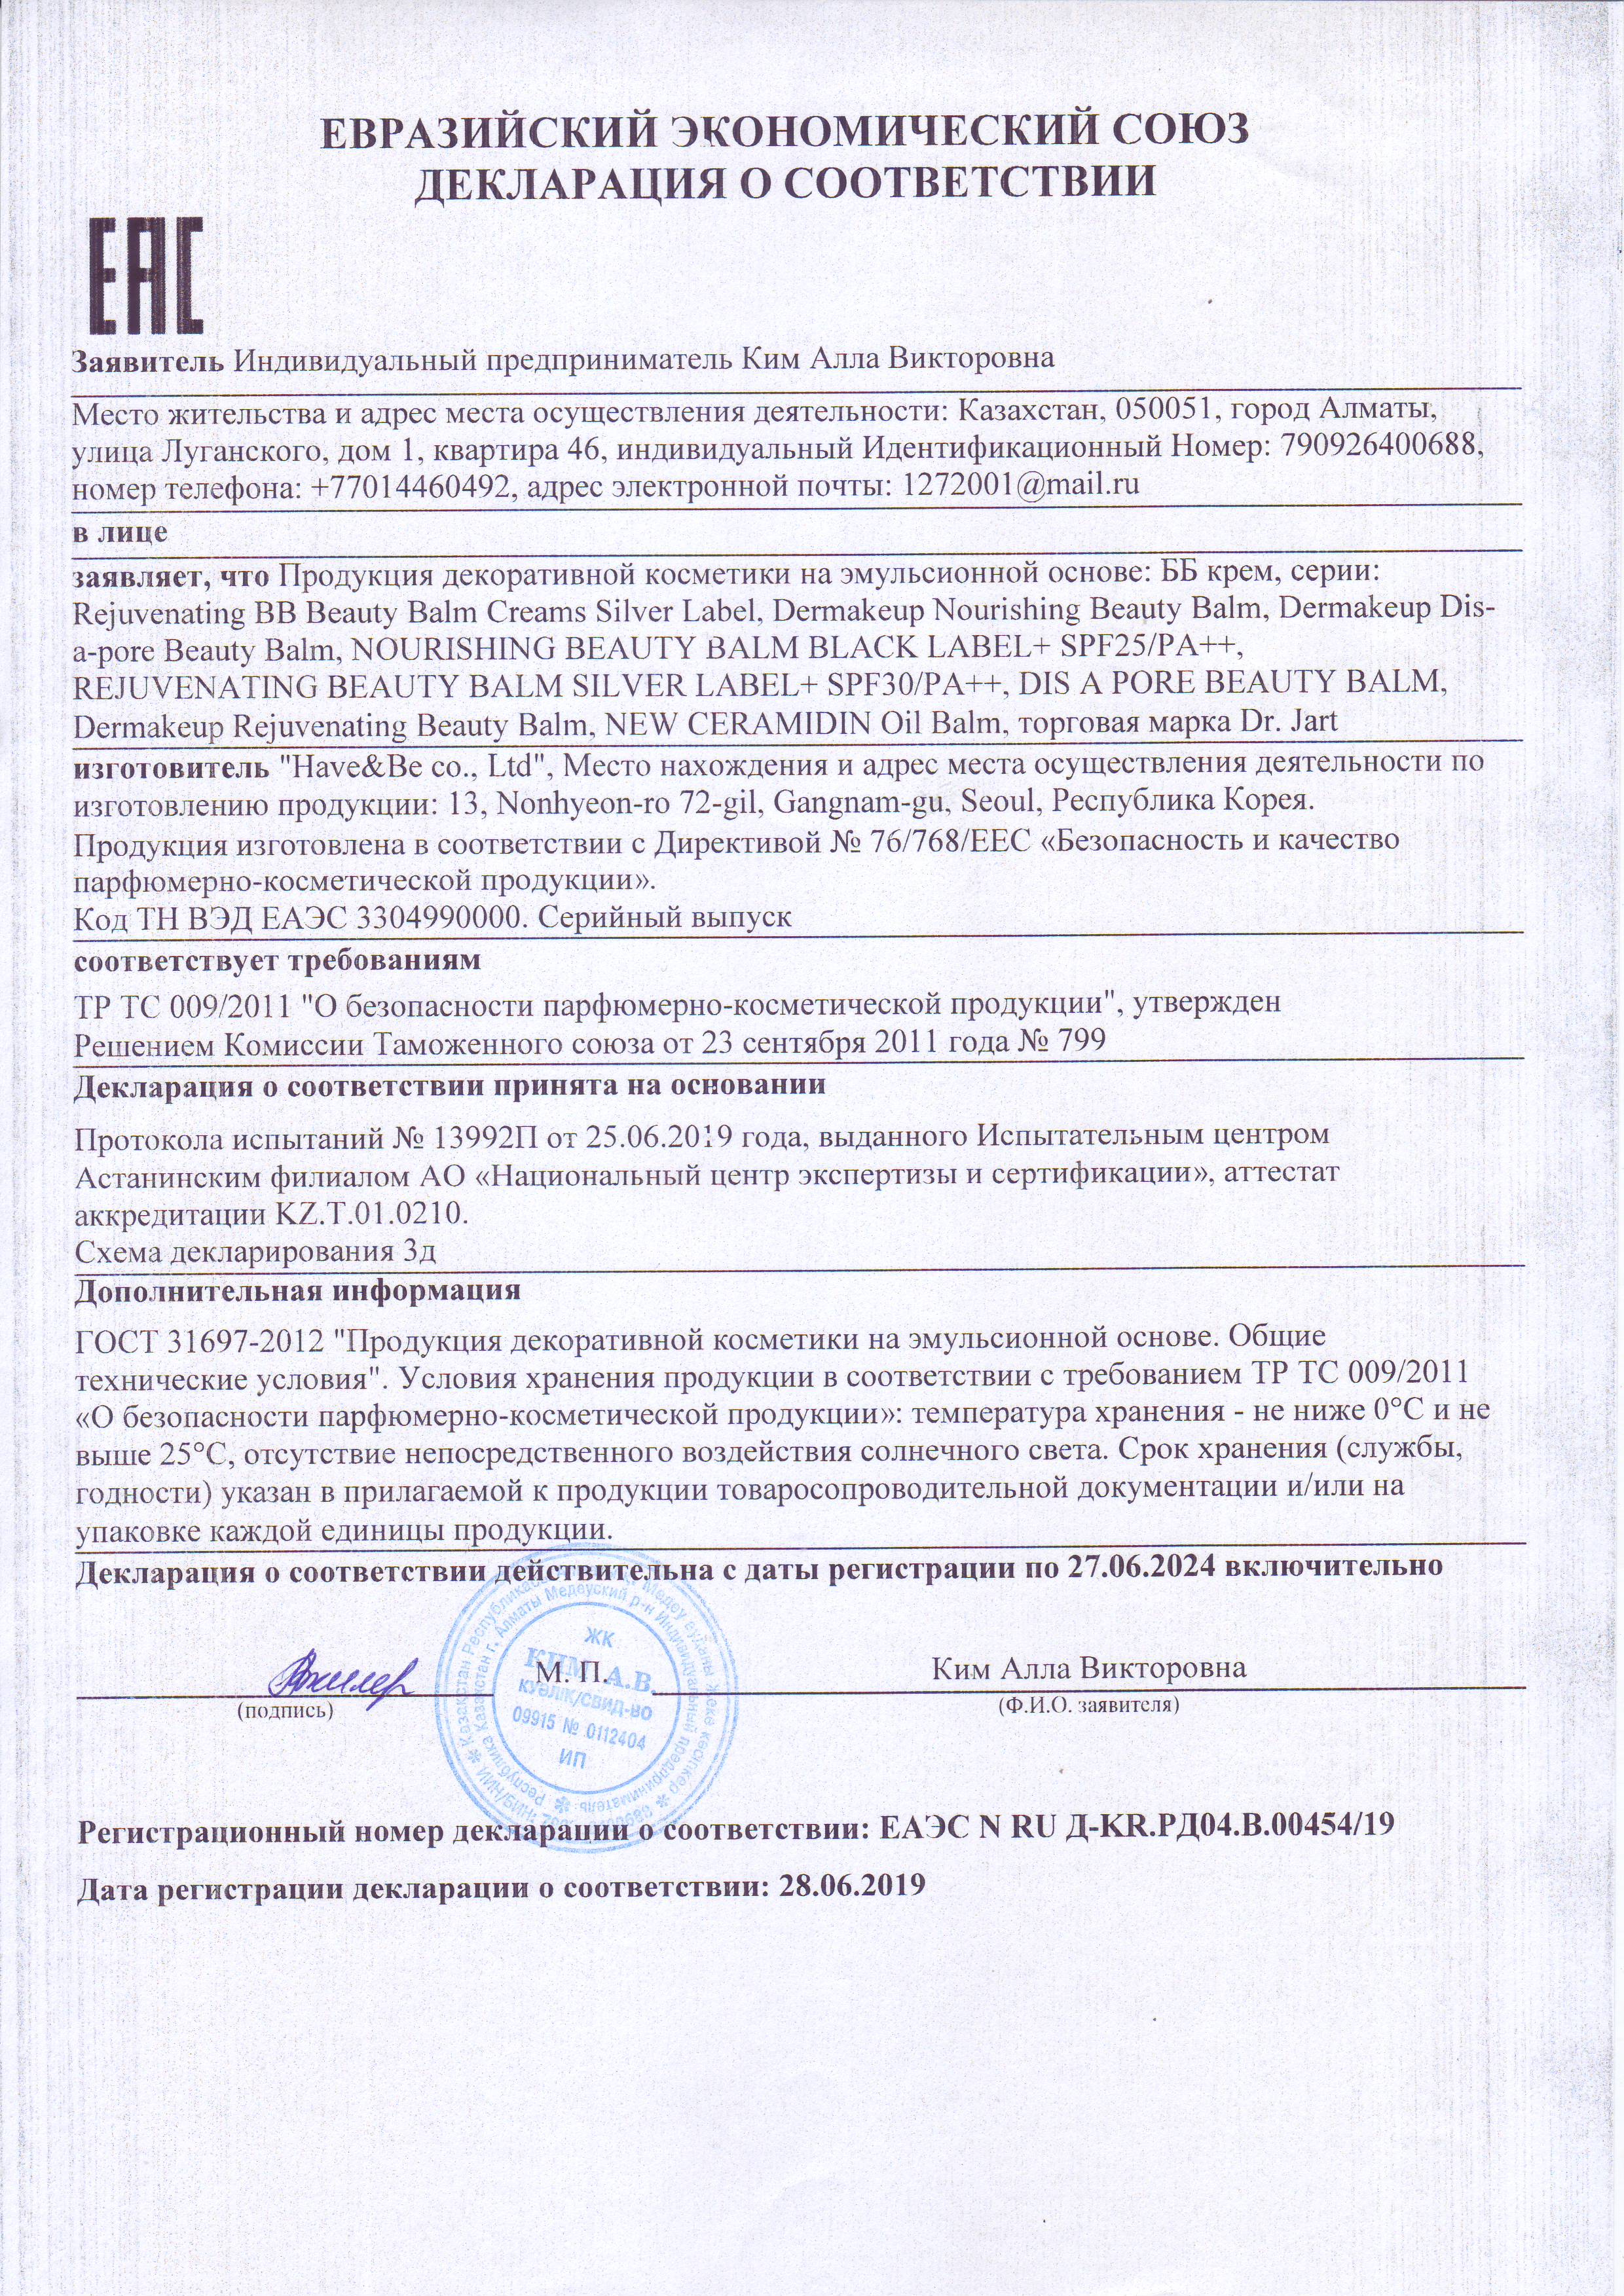 сертификат др джарт 3